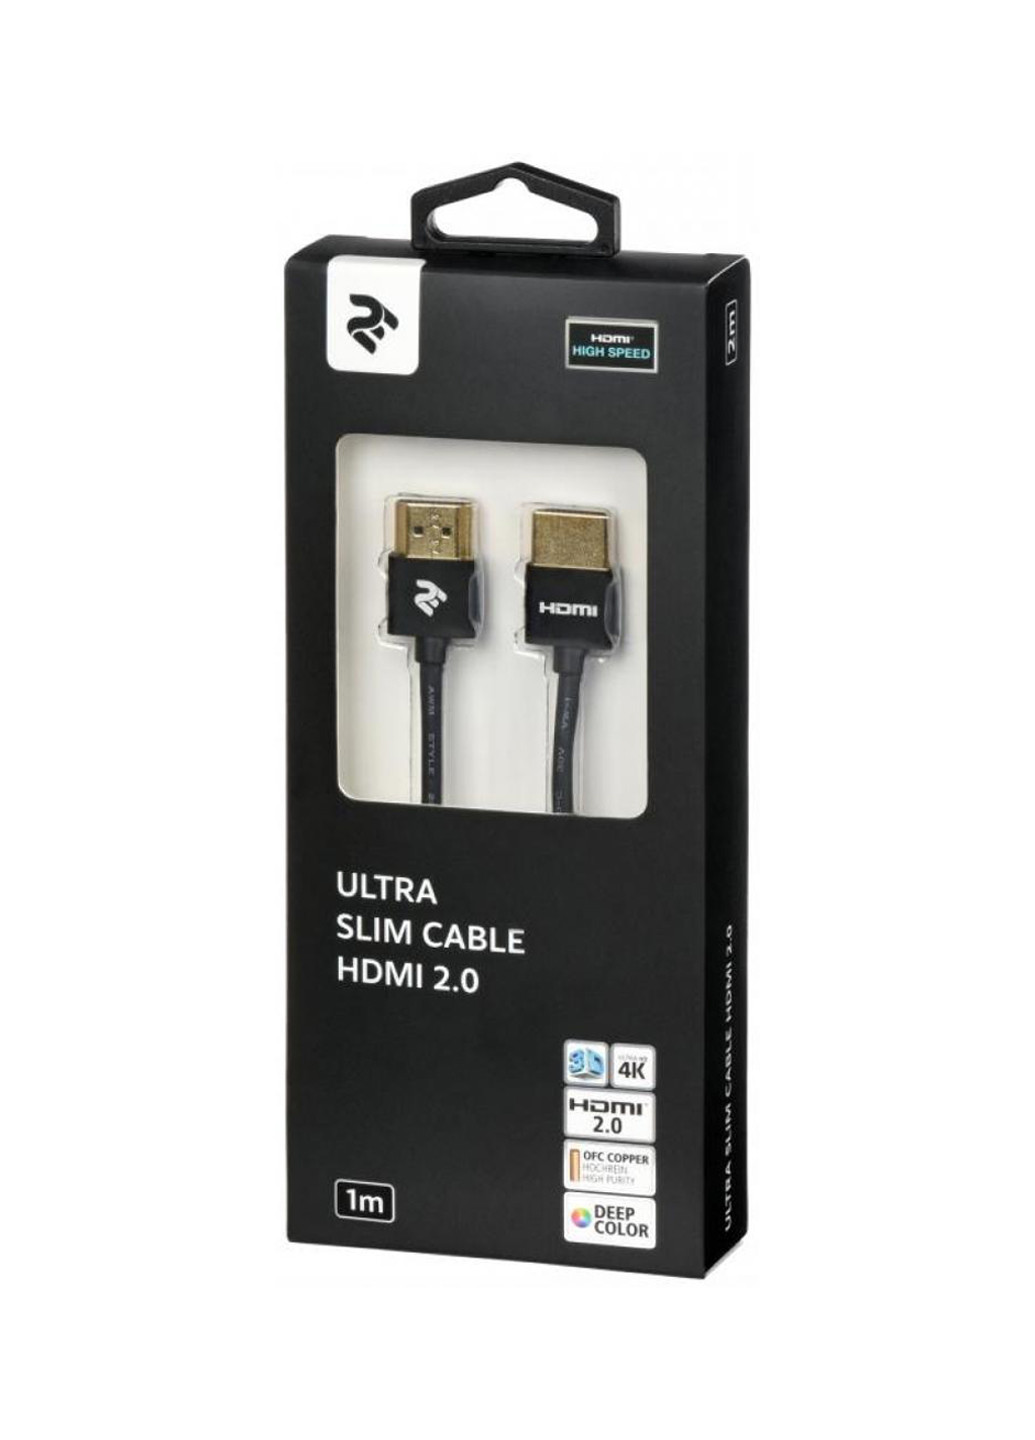 Кабель HDMI 2.0 Gen2 Ultra Slim cable, black, 1 м (-W9668BL-1M) 2E hdmi 2.0 gen2 ultra slim cable,black,1 м (2e-w9668bl-1m) (136463992)